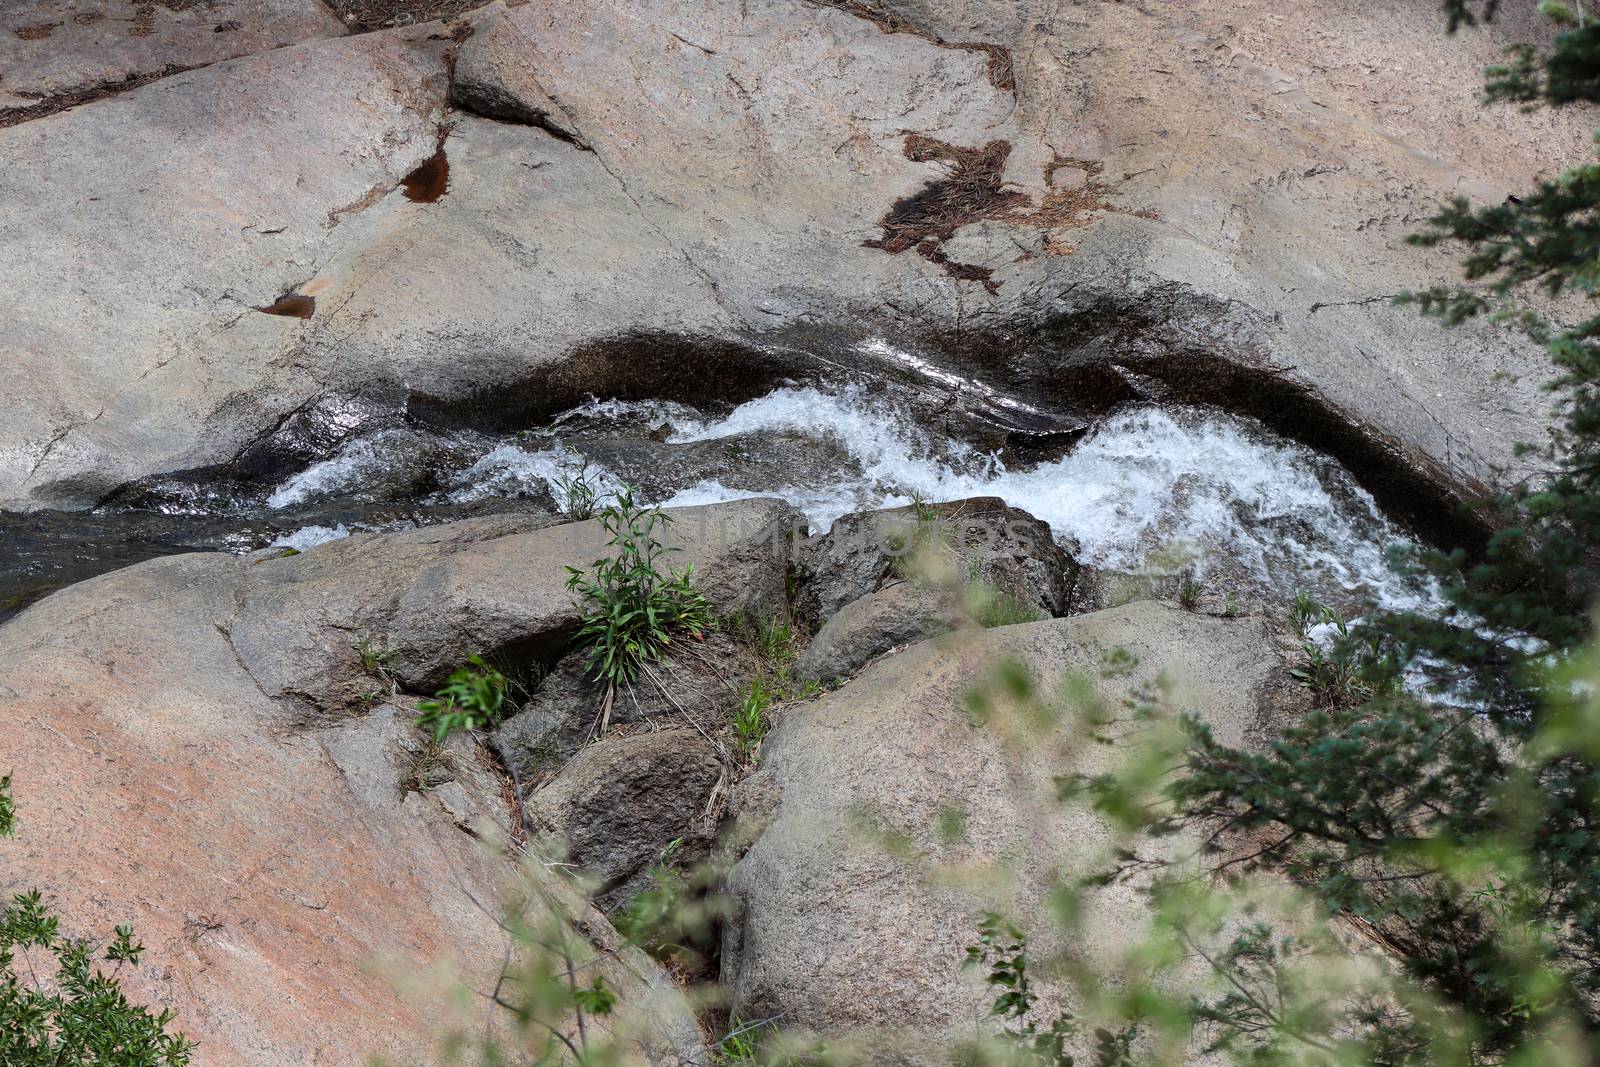 Helen hunt's falls Colorado waterfalls flowing stream summer 2019